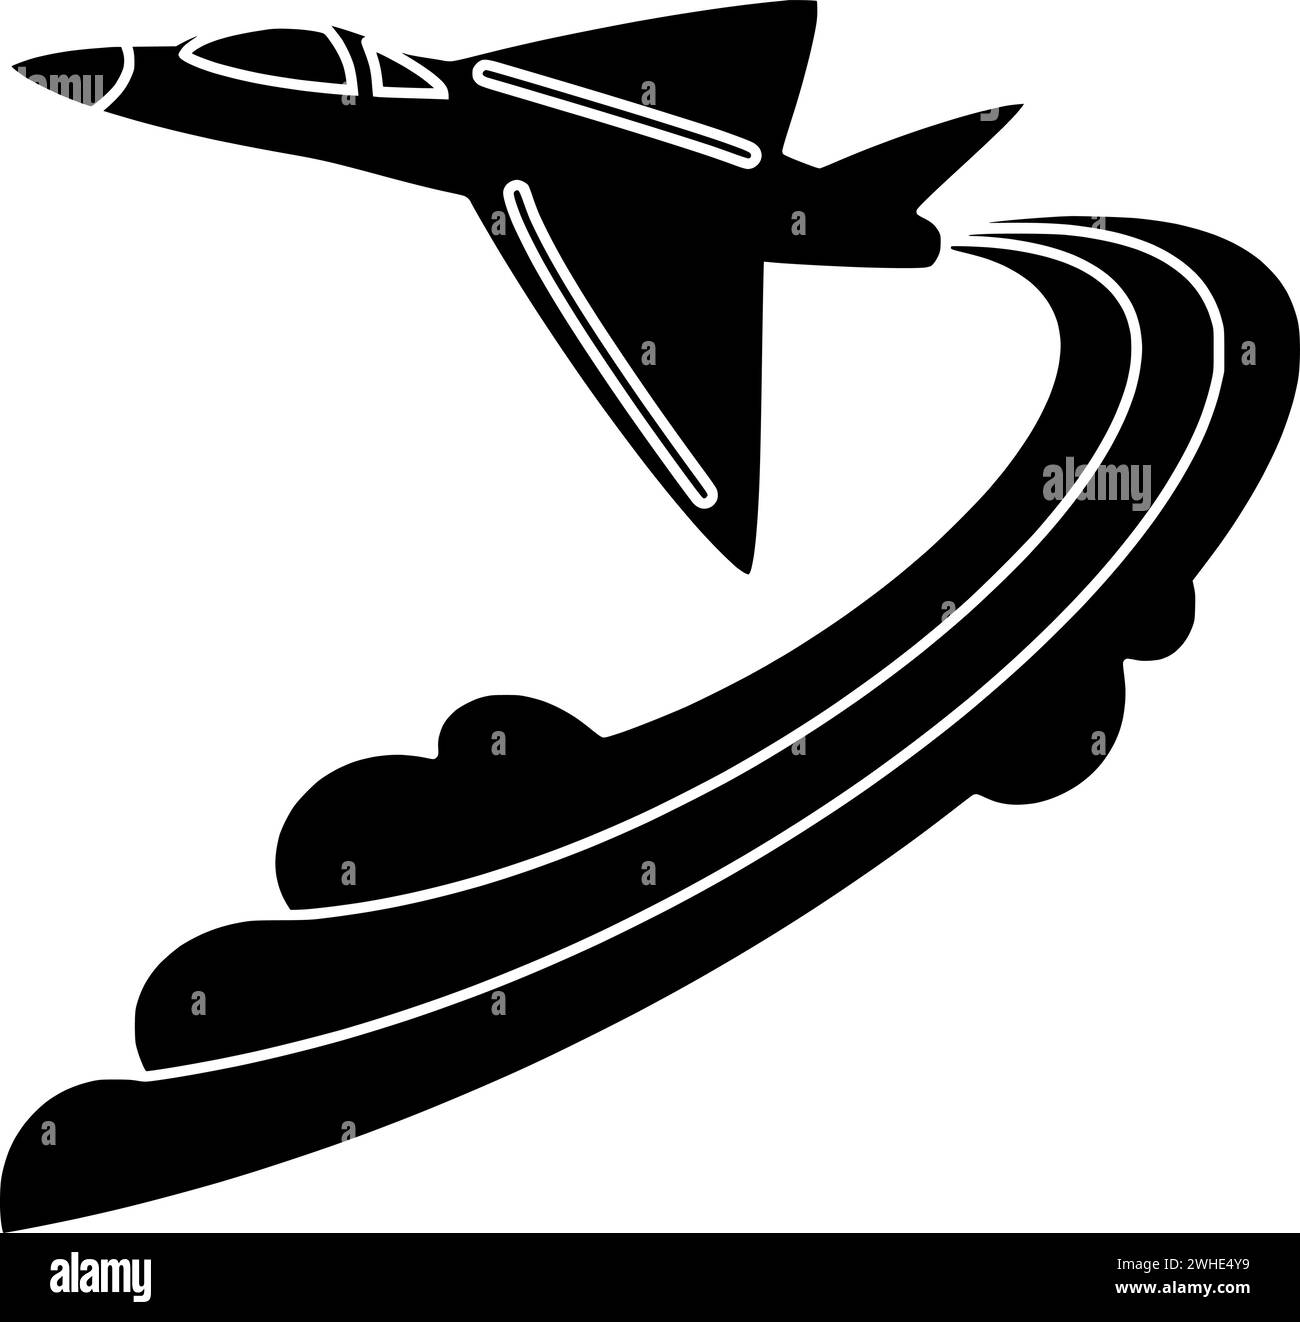 Flugzeug Illustration Fliege Silhouette Reise Logo Tourismus Icon Flugzeug Umriss Himmel Luftfahrt Transport Luftflugzeug Flug Business Transport Jet Form Reise Passagier Stock Vektor